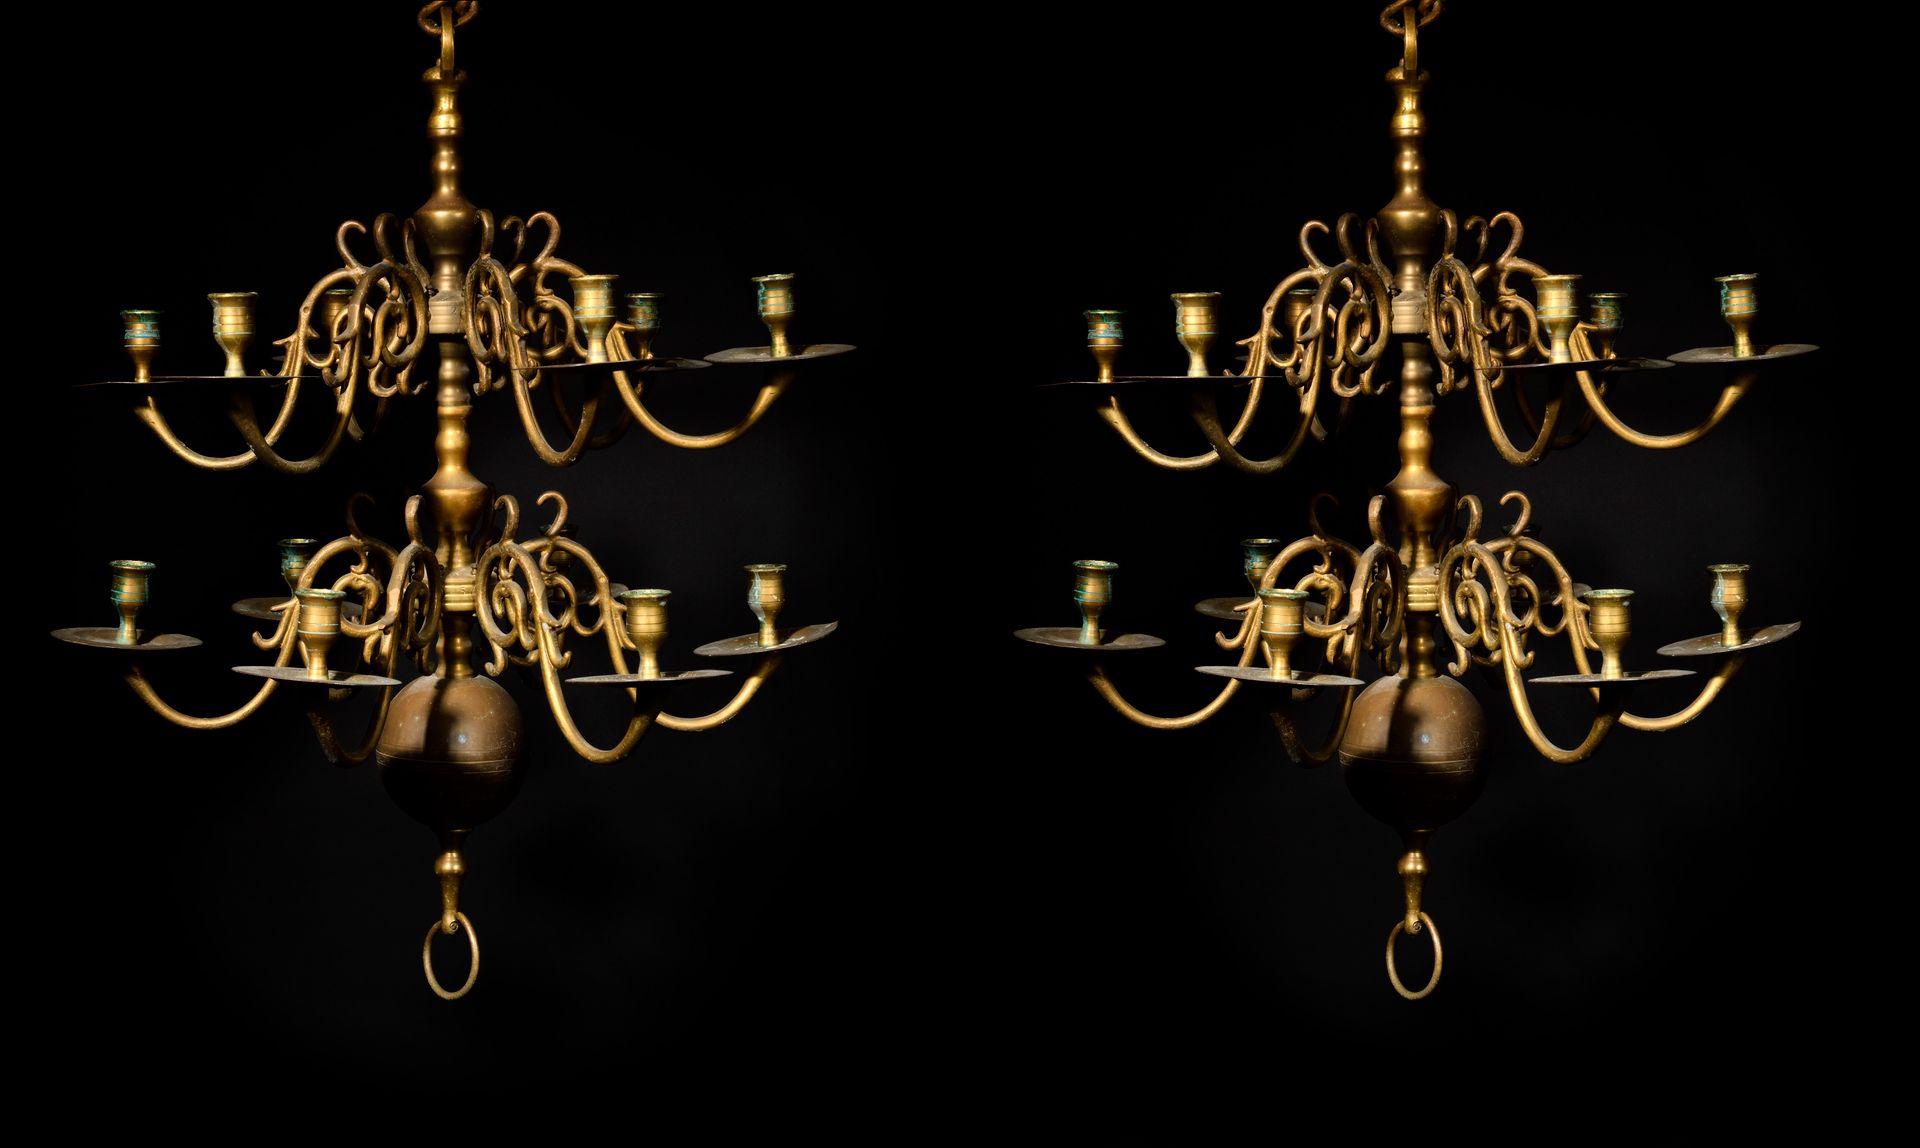 Null 一对荷兰吊灯 
黄铜材质，两排上有十二个灯臂。 
19 世纪作品，17 世纪风格。
高度：62 厘米（不含链条）；宽度：50 厘米